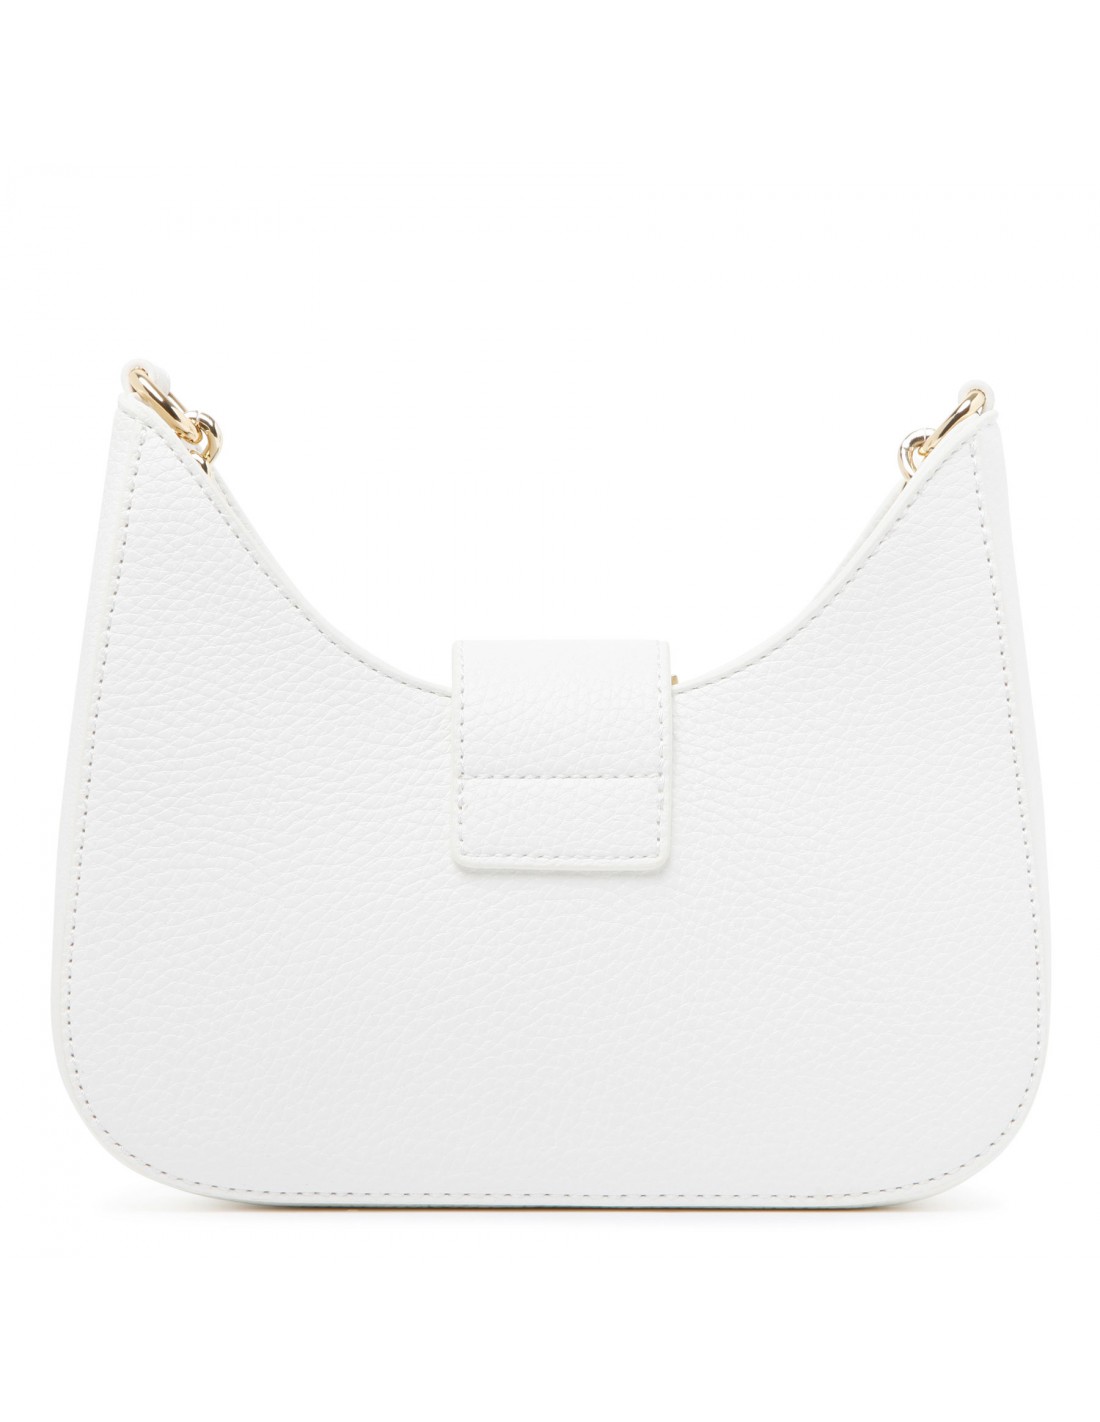 Couture 1 white shoulder bag